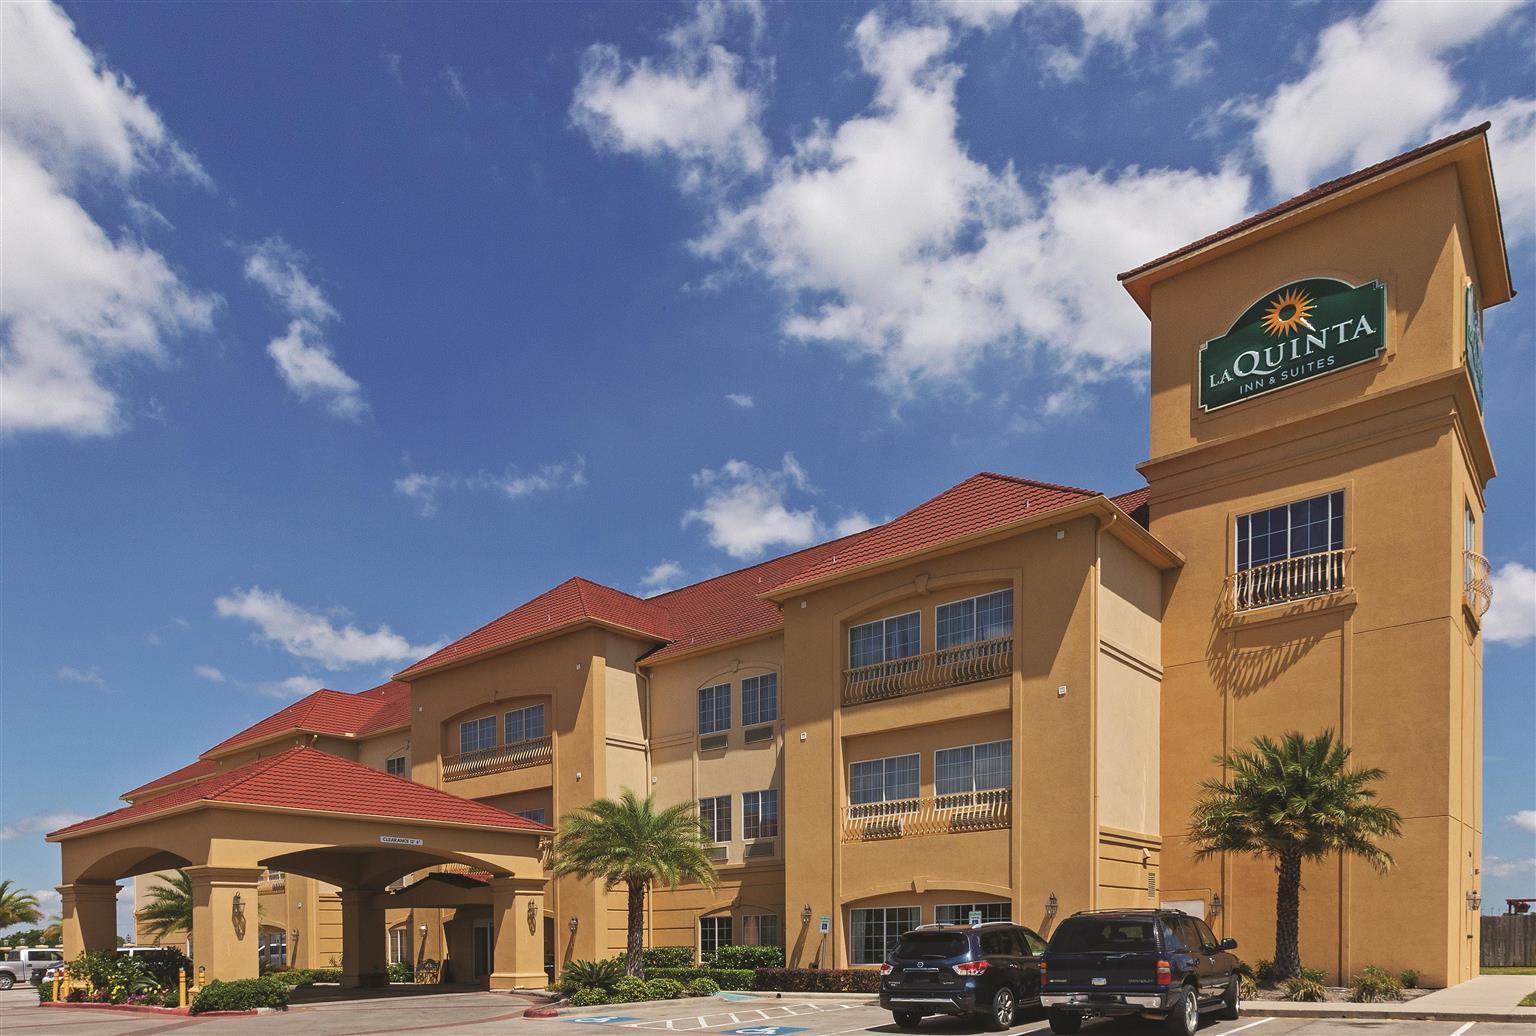 Photo of La Quinta Inn & Suites Port Arthur, Port Arthur, TX